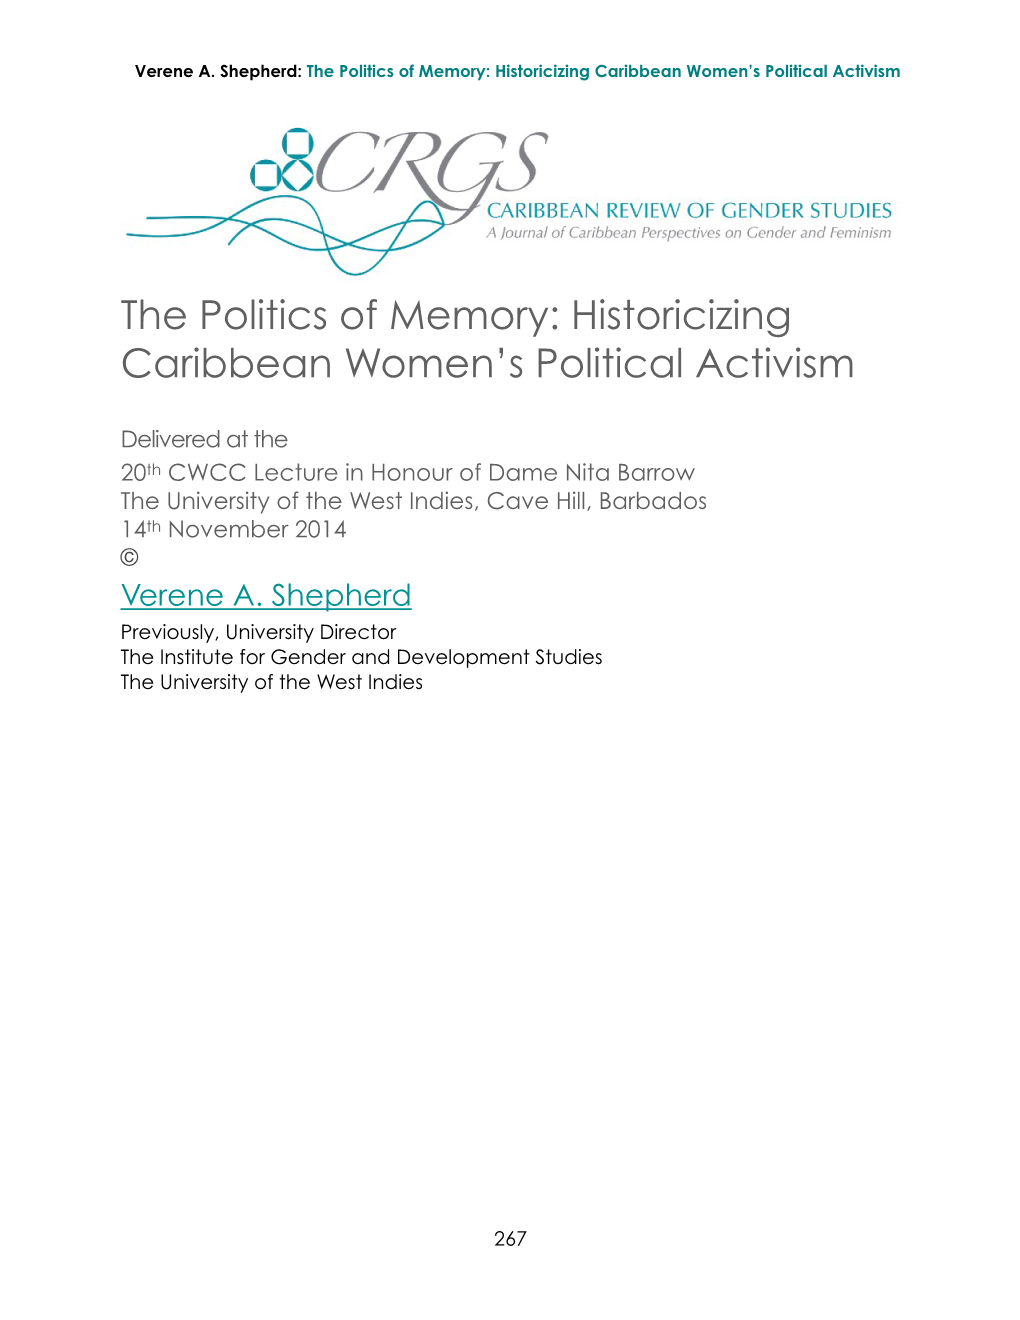 The Politics of Memory: Historicizing Caribbean Women's Political Activism